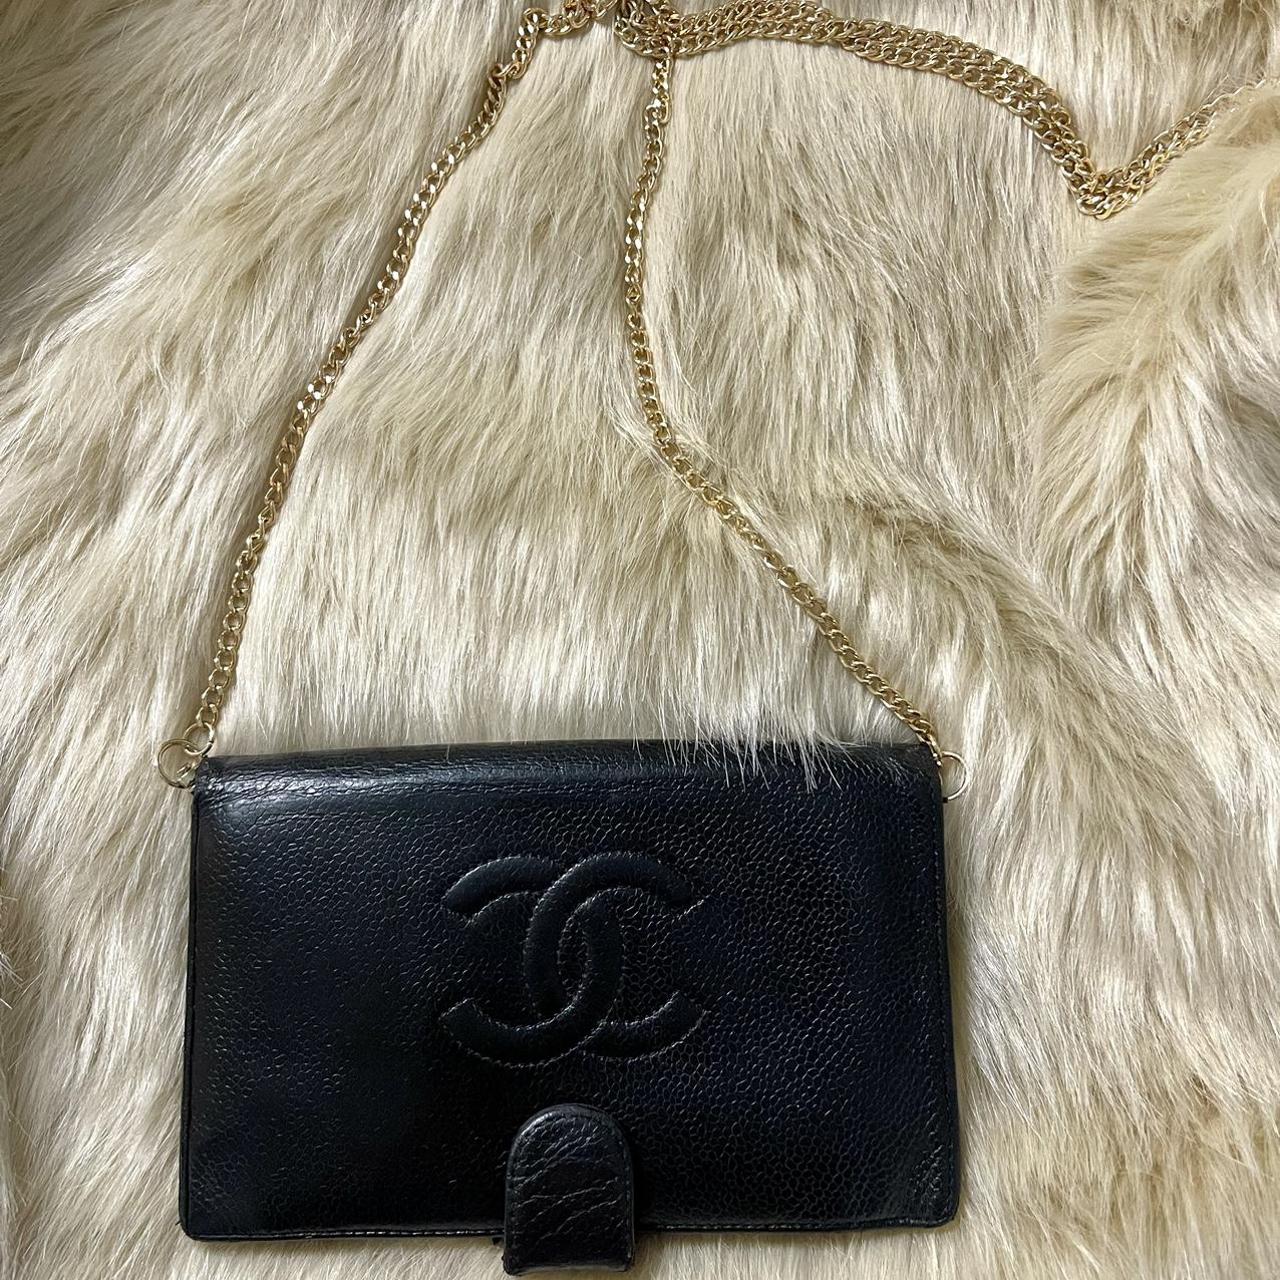 Chanel Women's Bag - Black